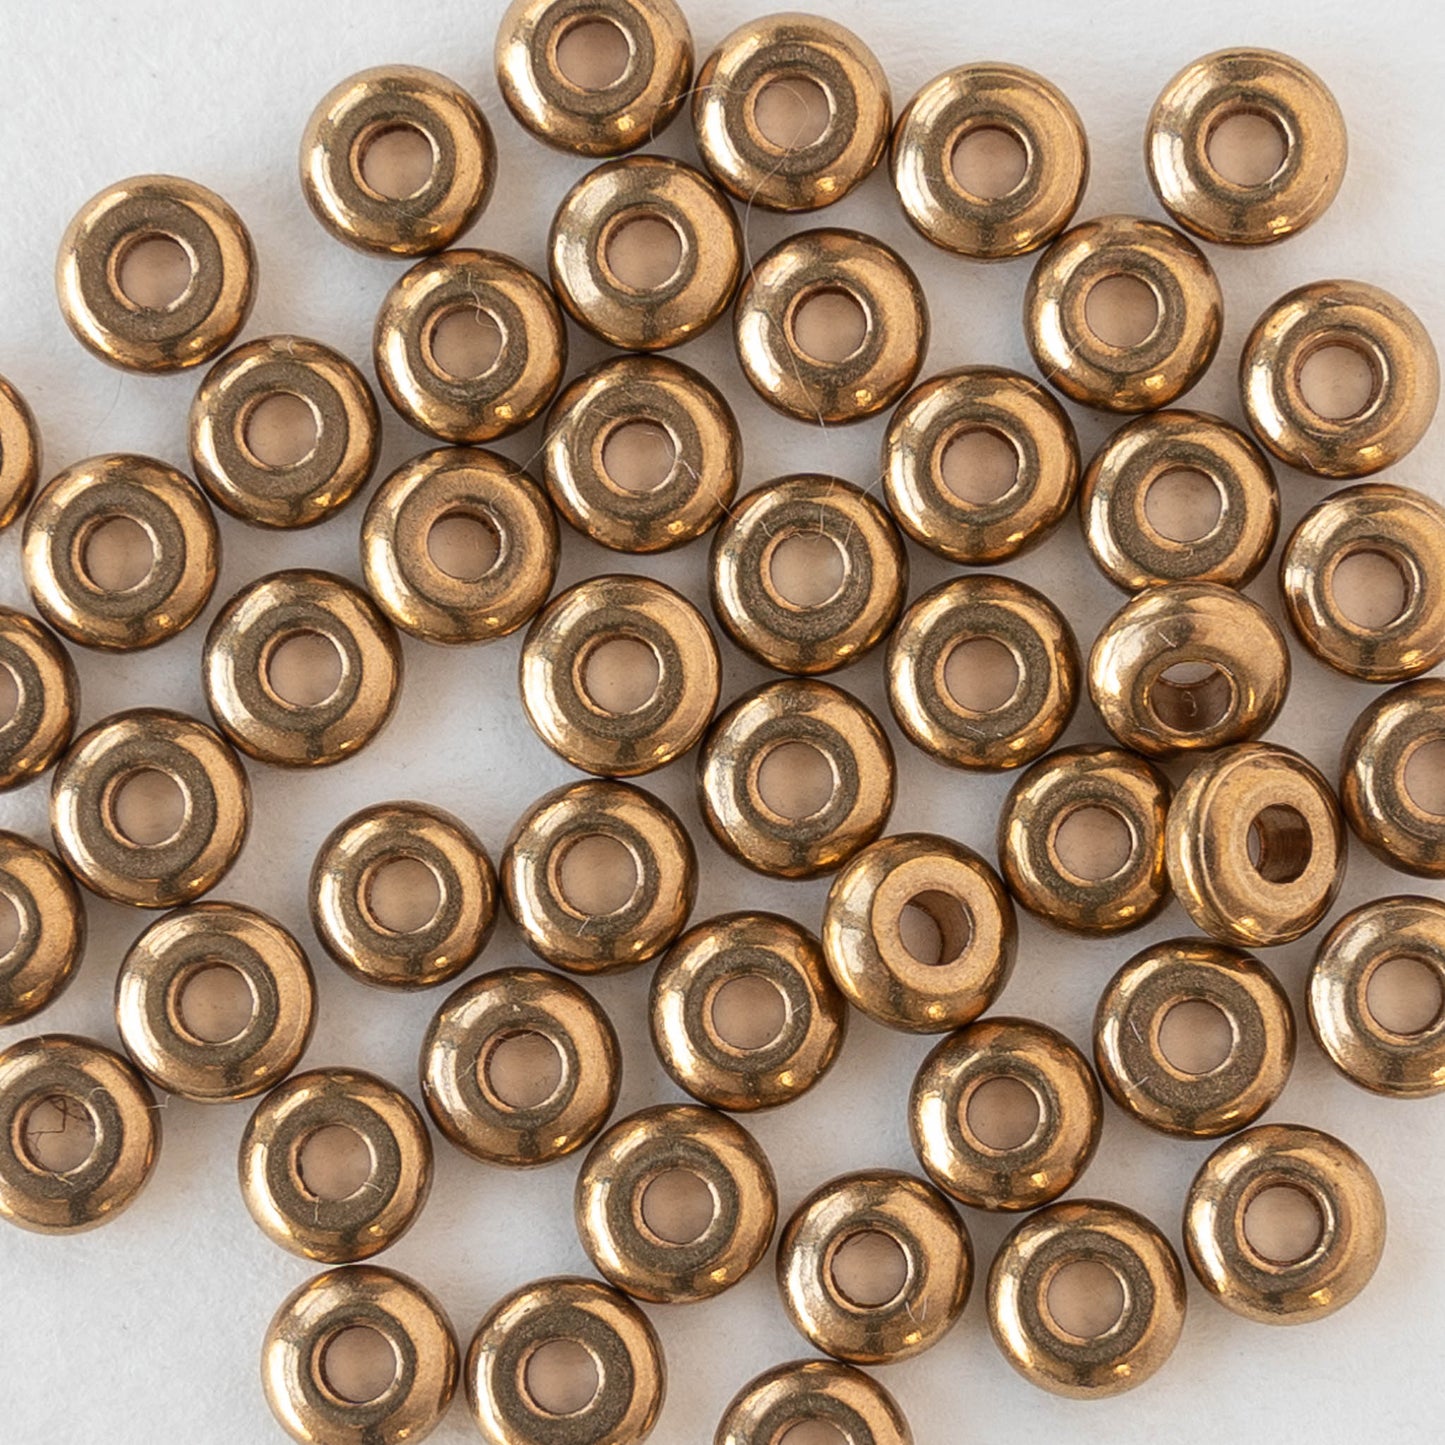 5mm Rondelle disks - Antique Gold Colored Brass - 50